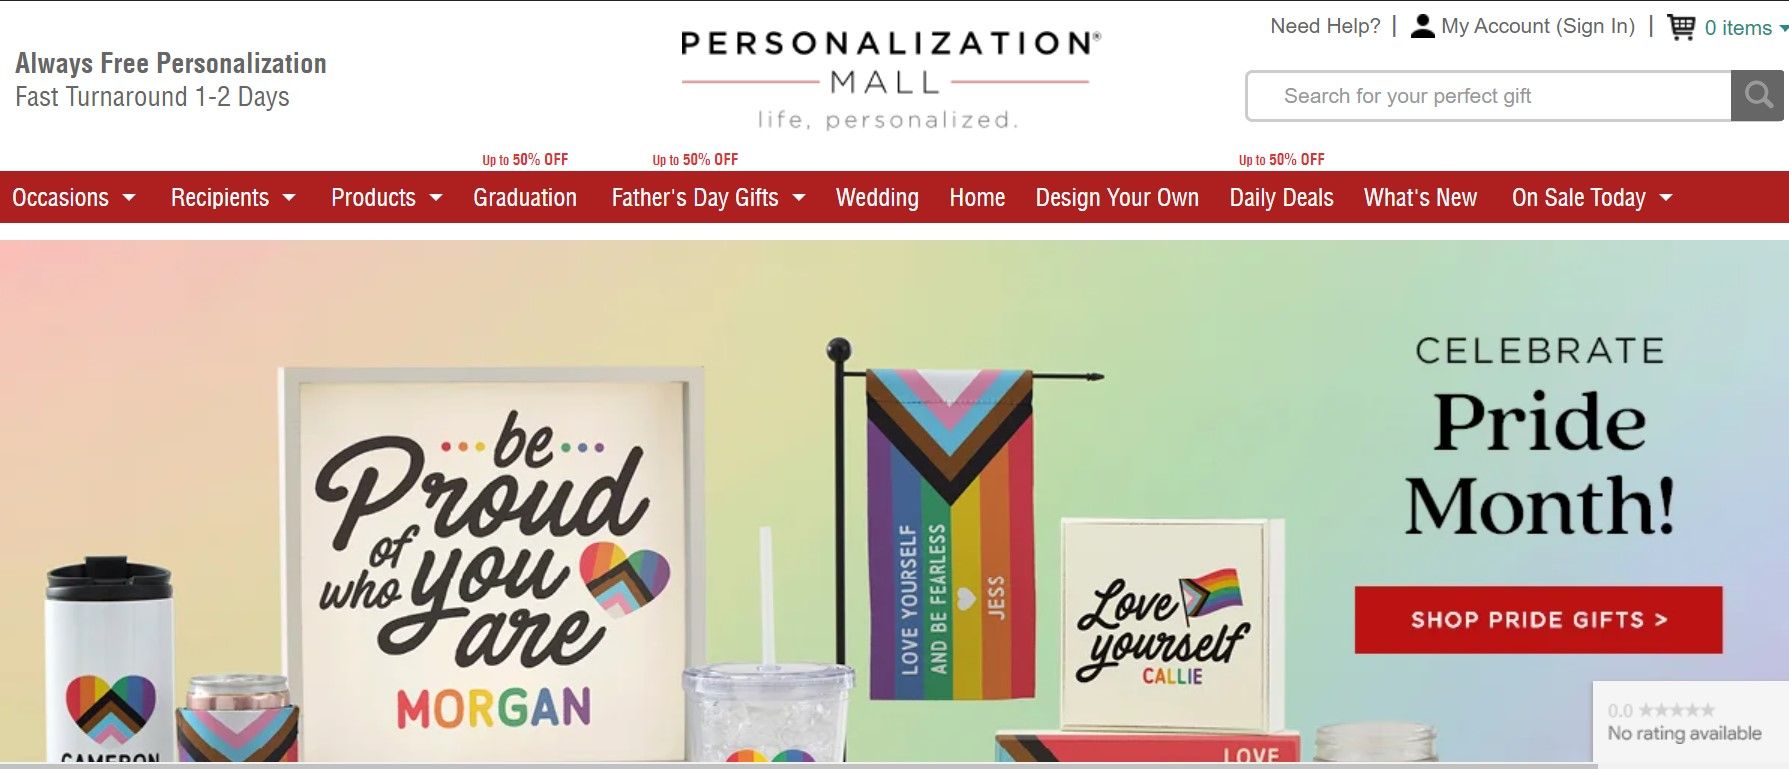 Screenshot of Personalization Mall's Homepage